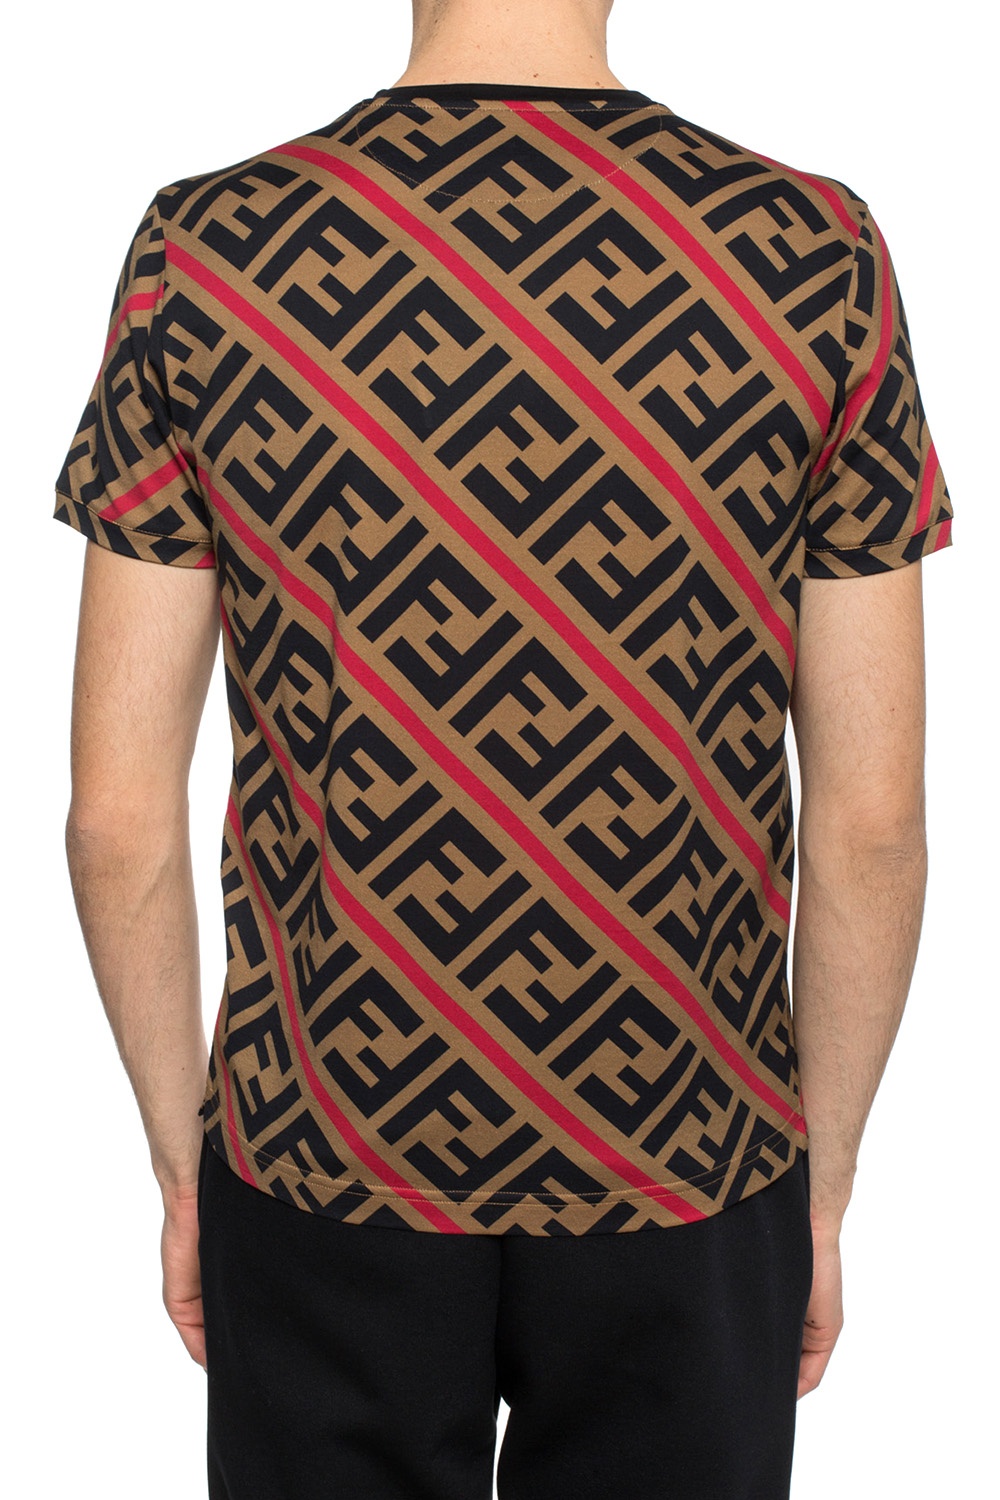 Fendi T-shirt with a logo pattern | Men's Clothing | Vitkac